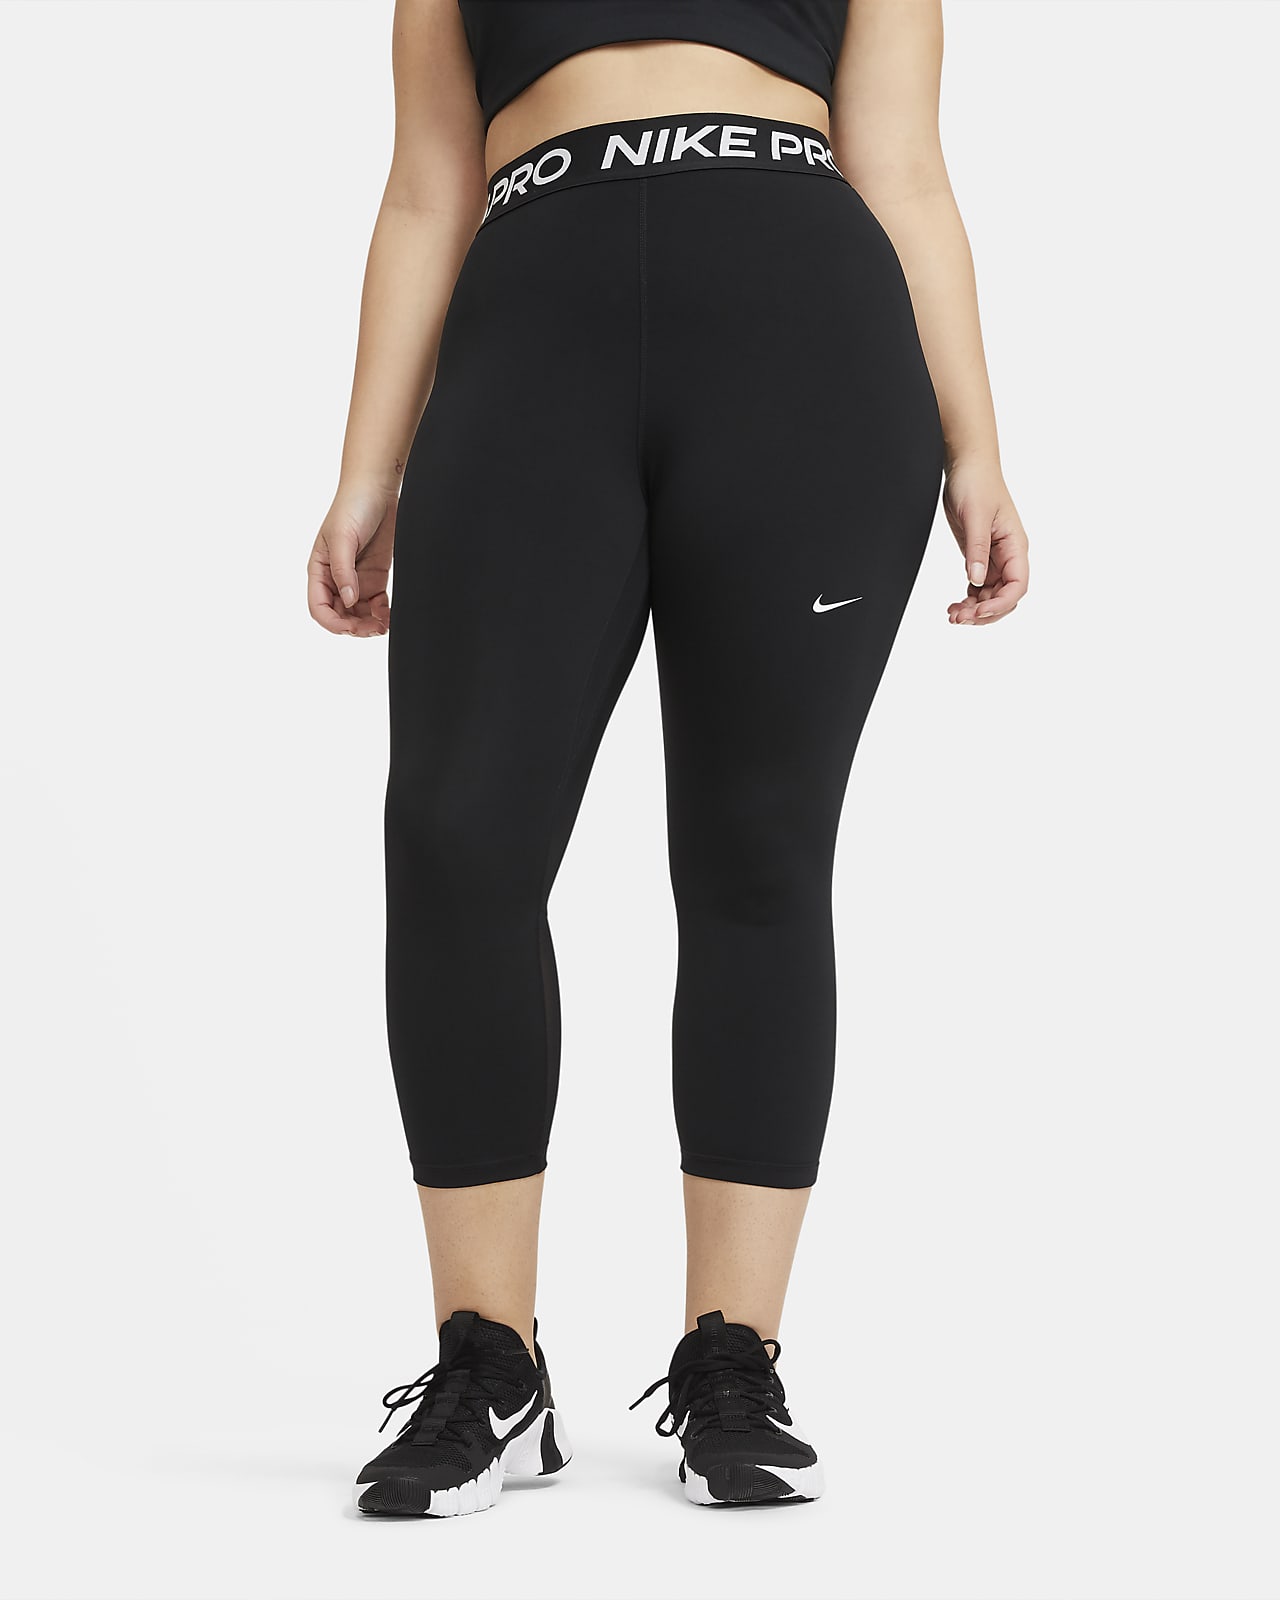 Nike Pro Leggings cortos de talle medio (Talla grande) - Mujer